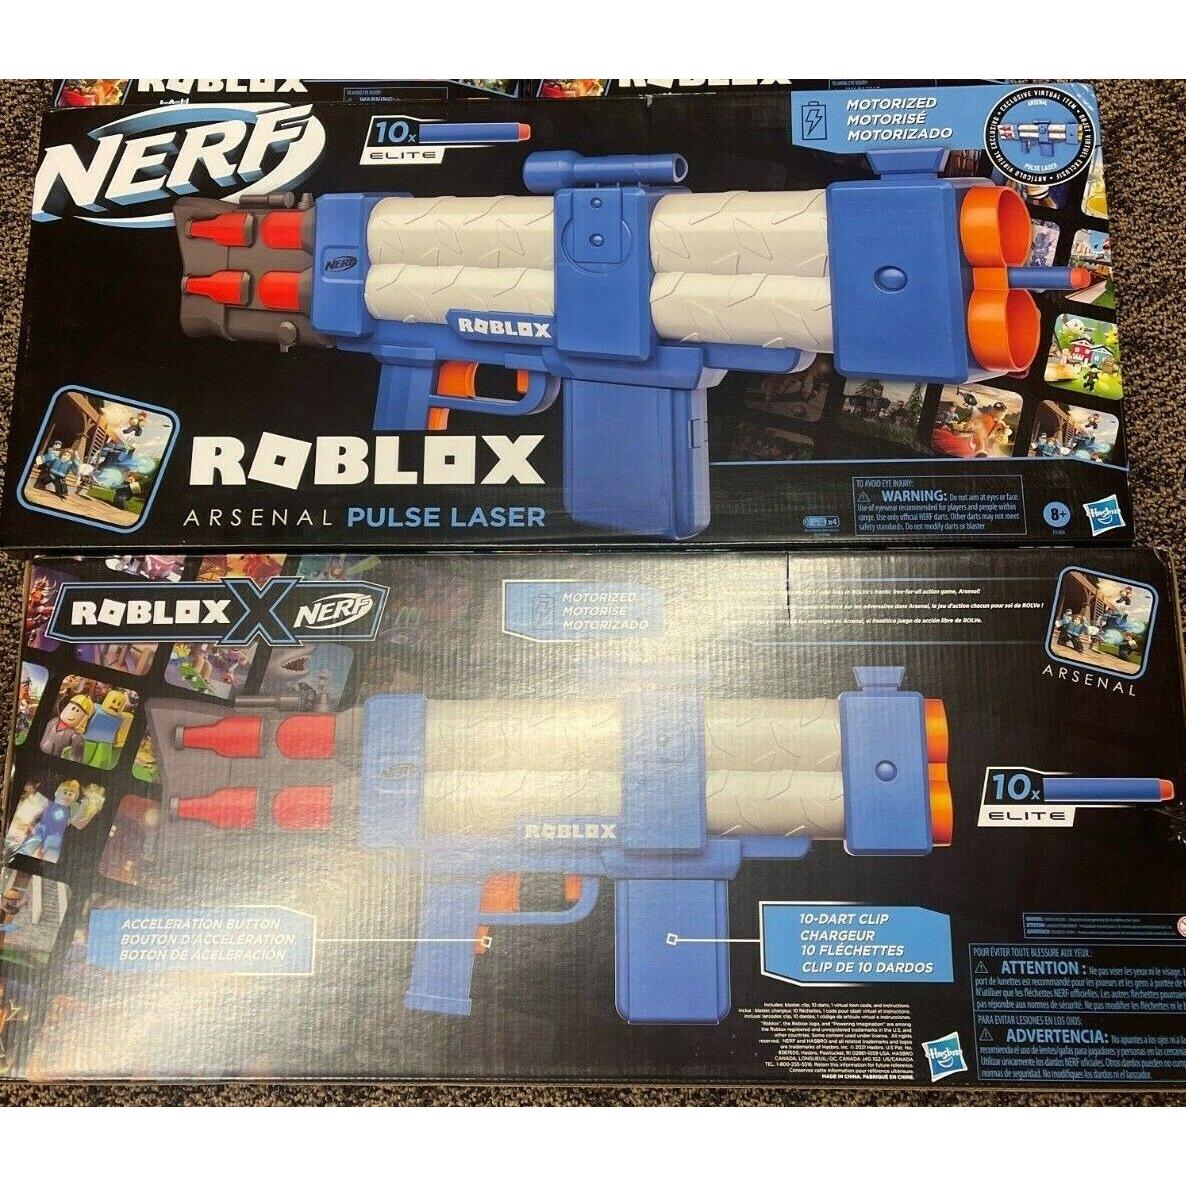 2 Nerf Roblox Arsenal Pulse Laser Motorized Dart Blaster + Virtual Item